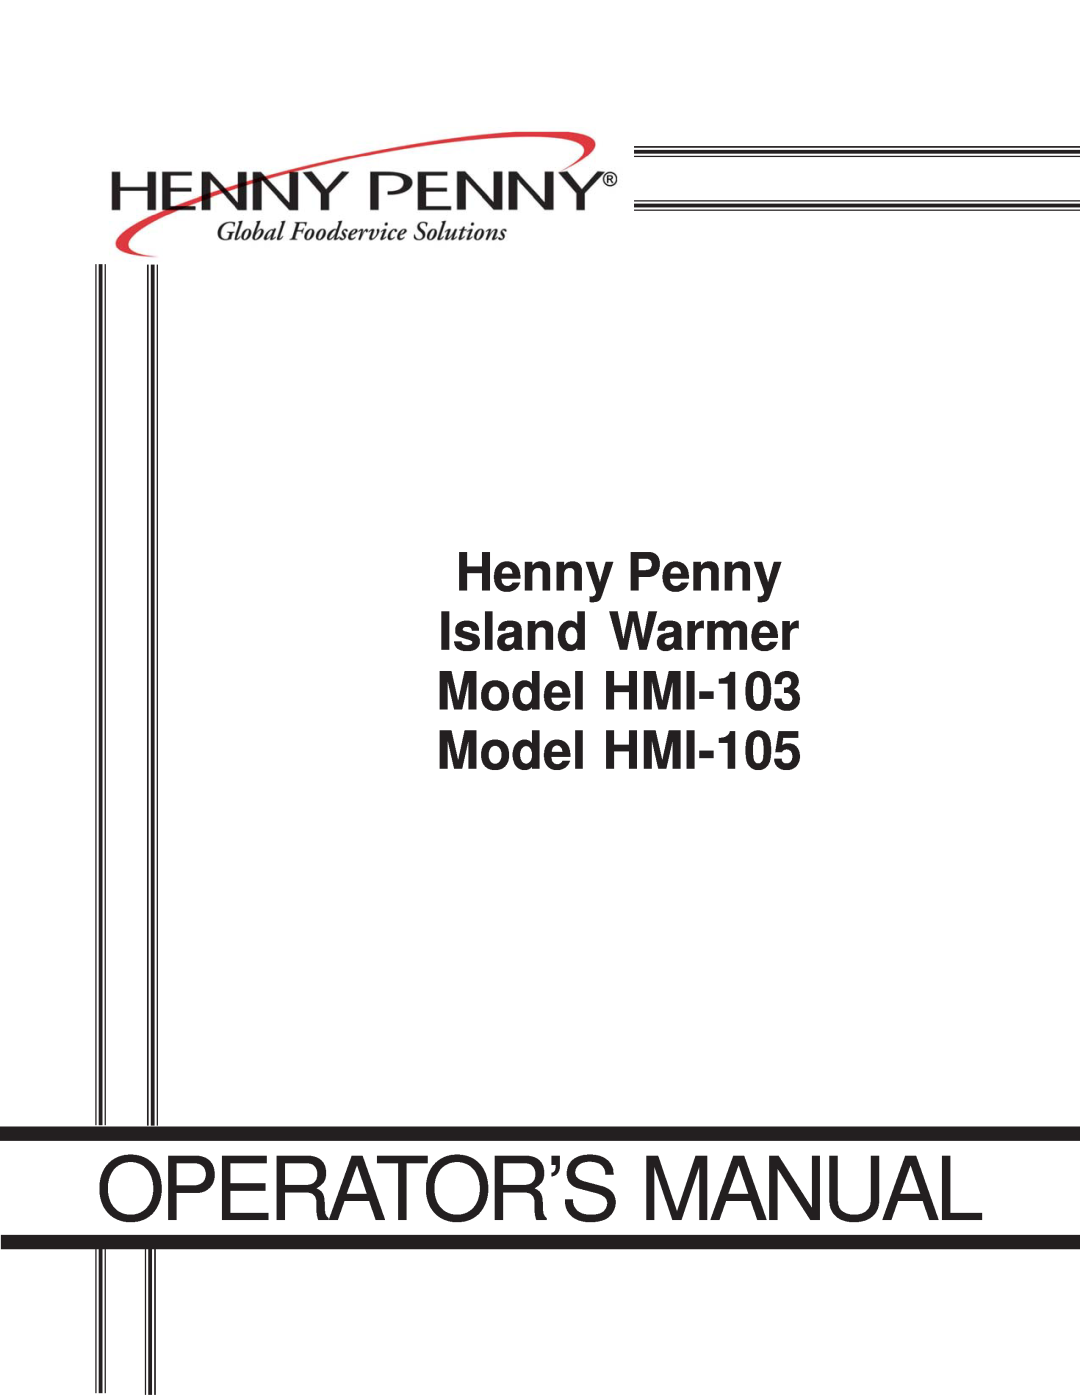 Henny Penny manual Operator’S Manual, Henny Penny Island Warmer Model HMI-103, Model HMI-105 